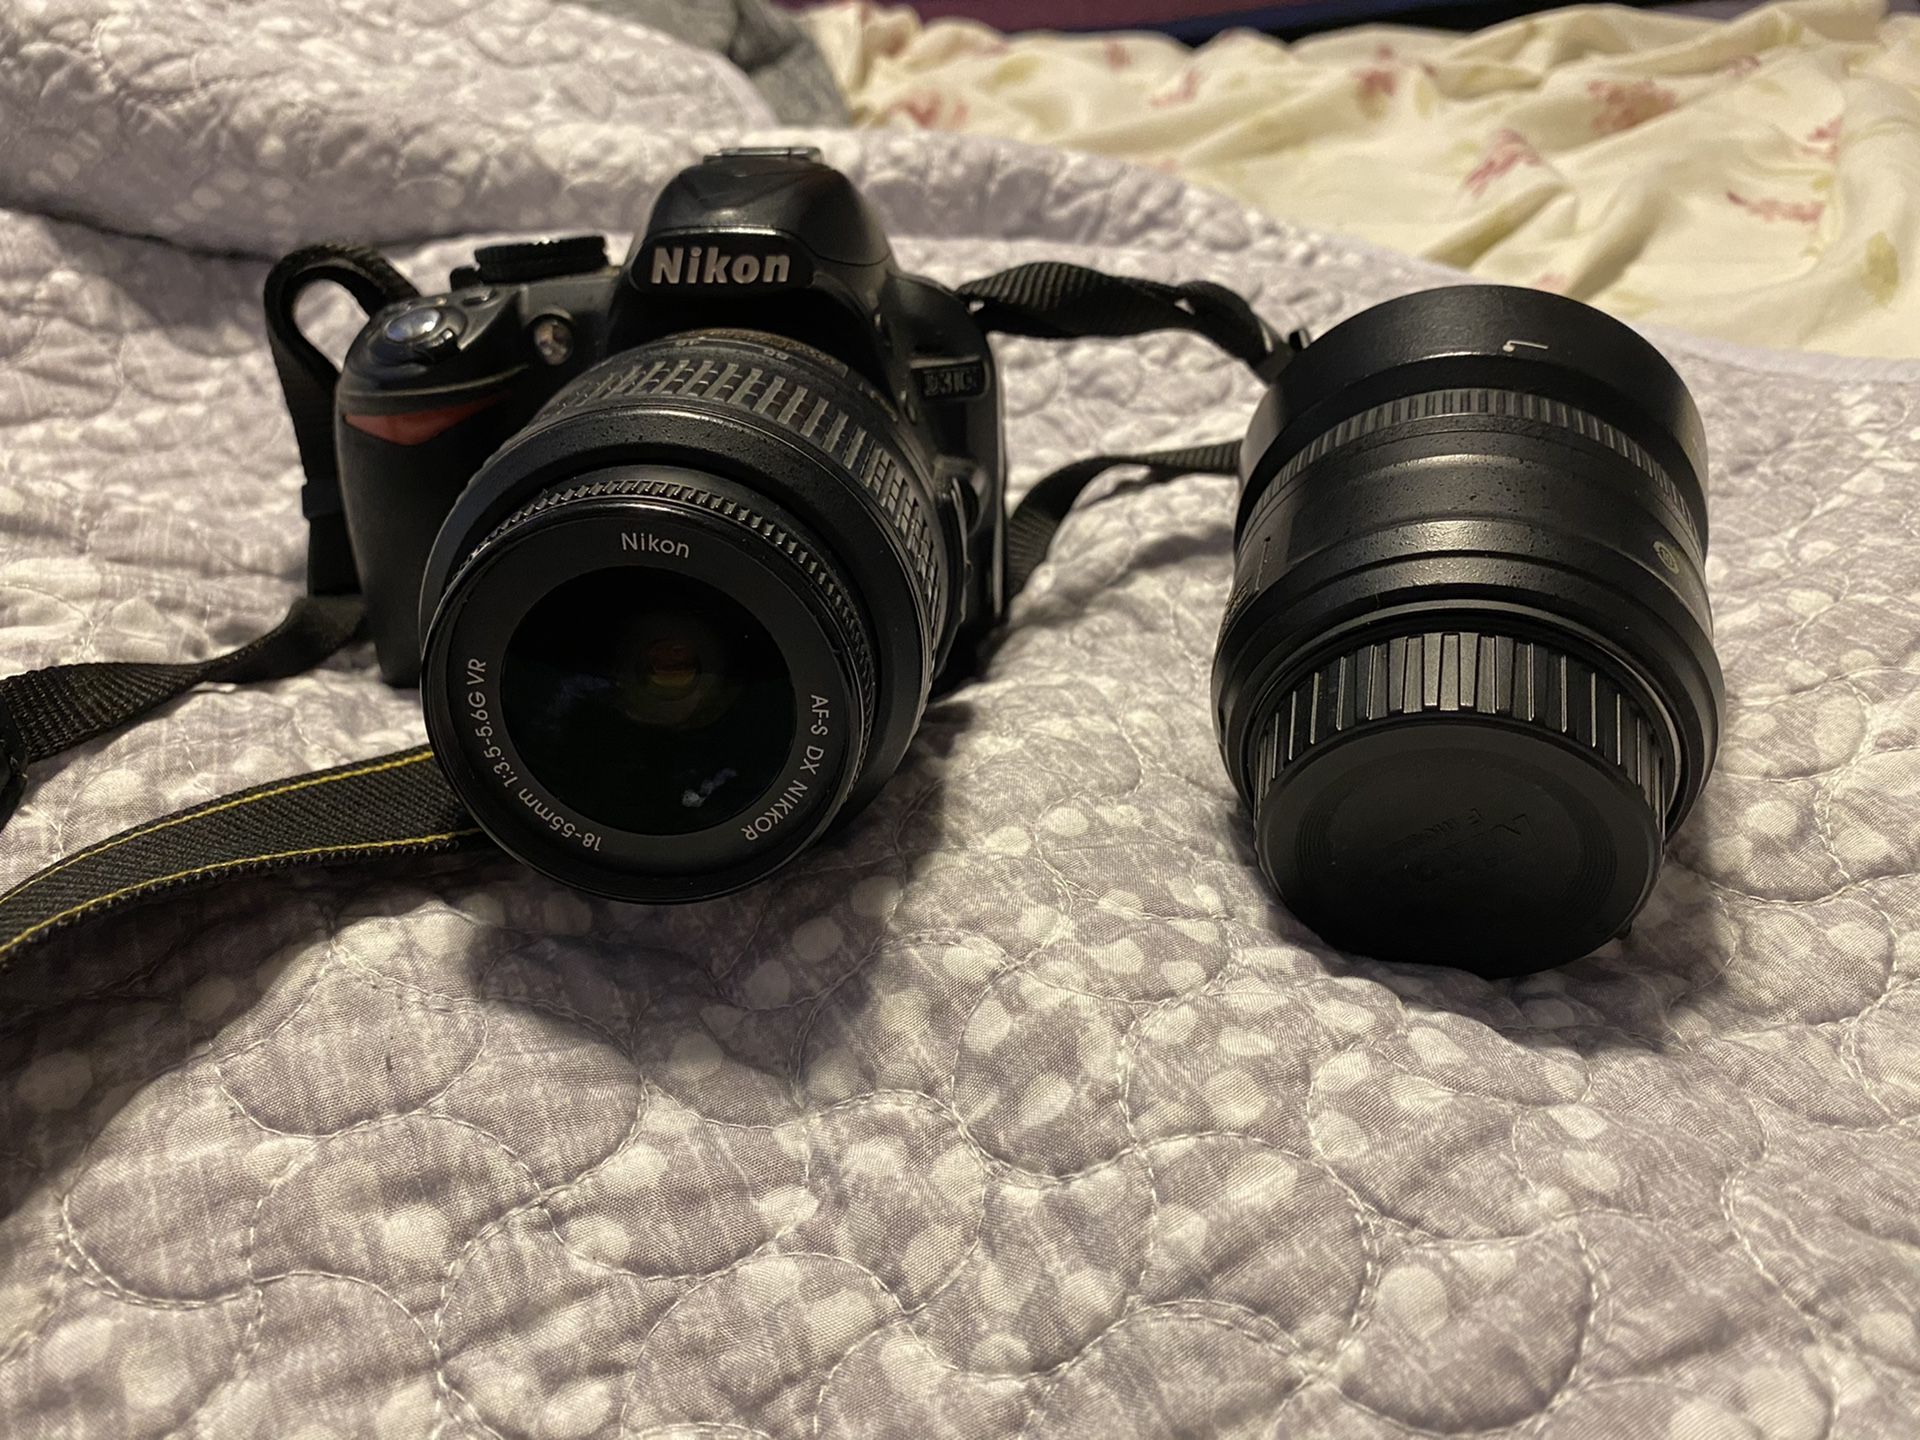 Nikon D3100 with 2 attachable lenses